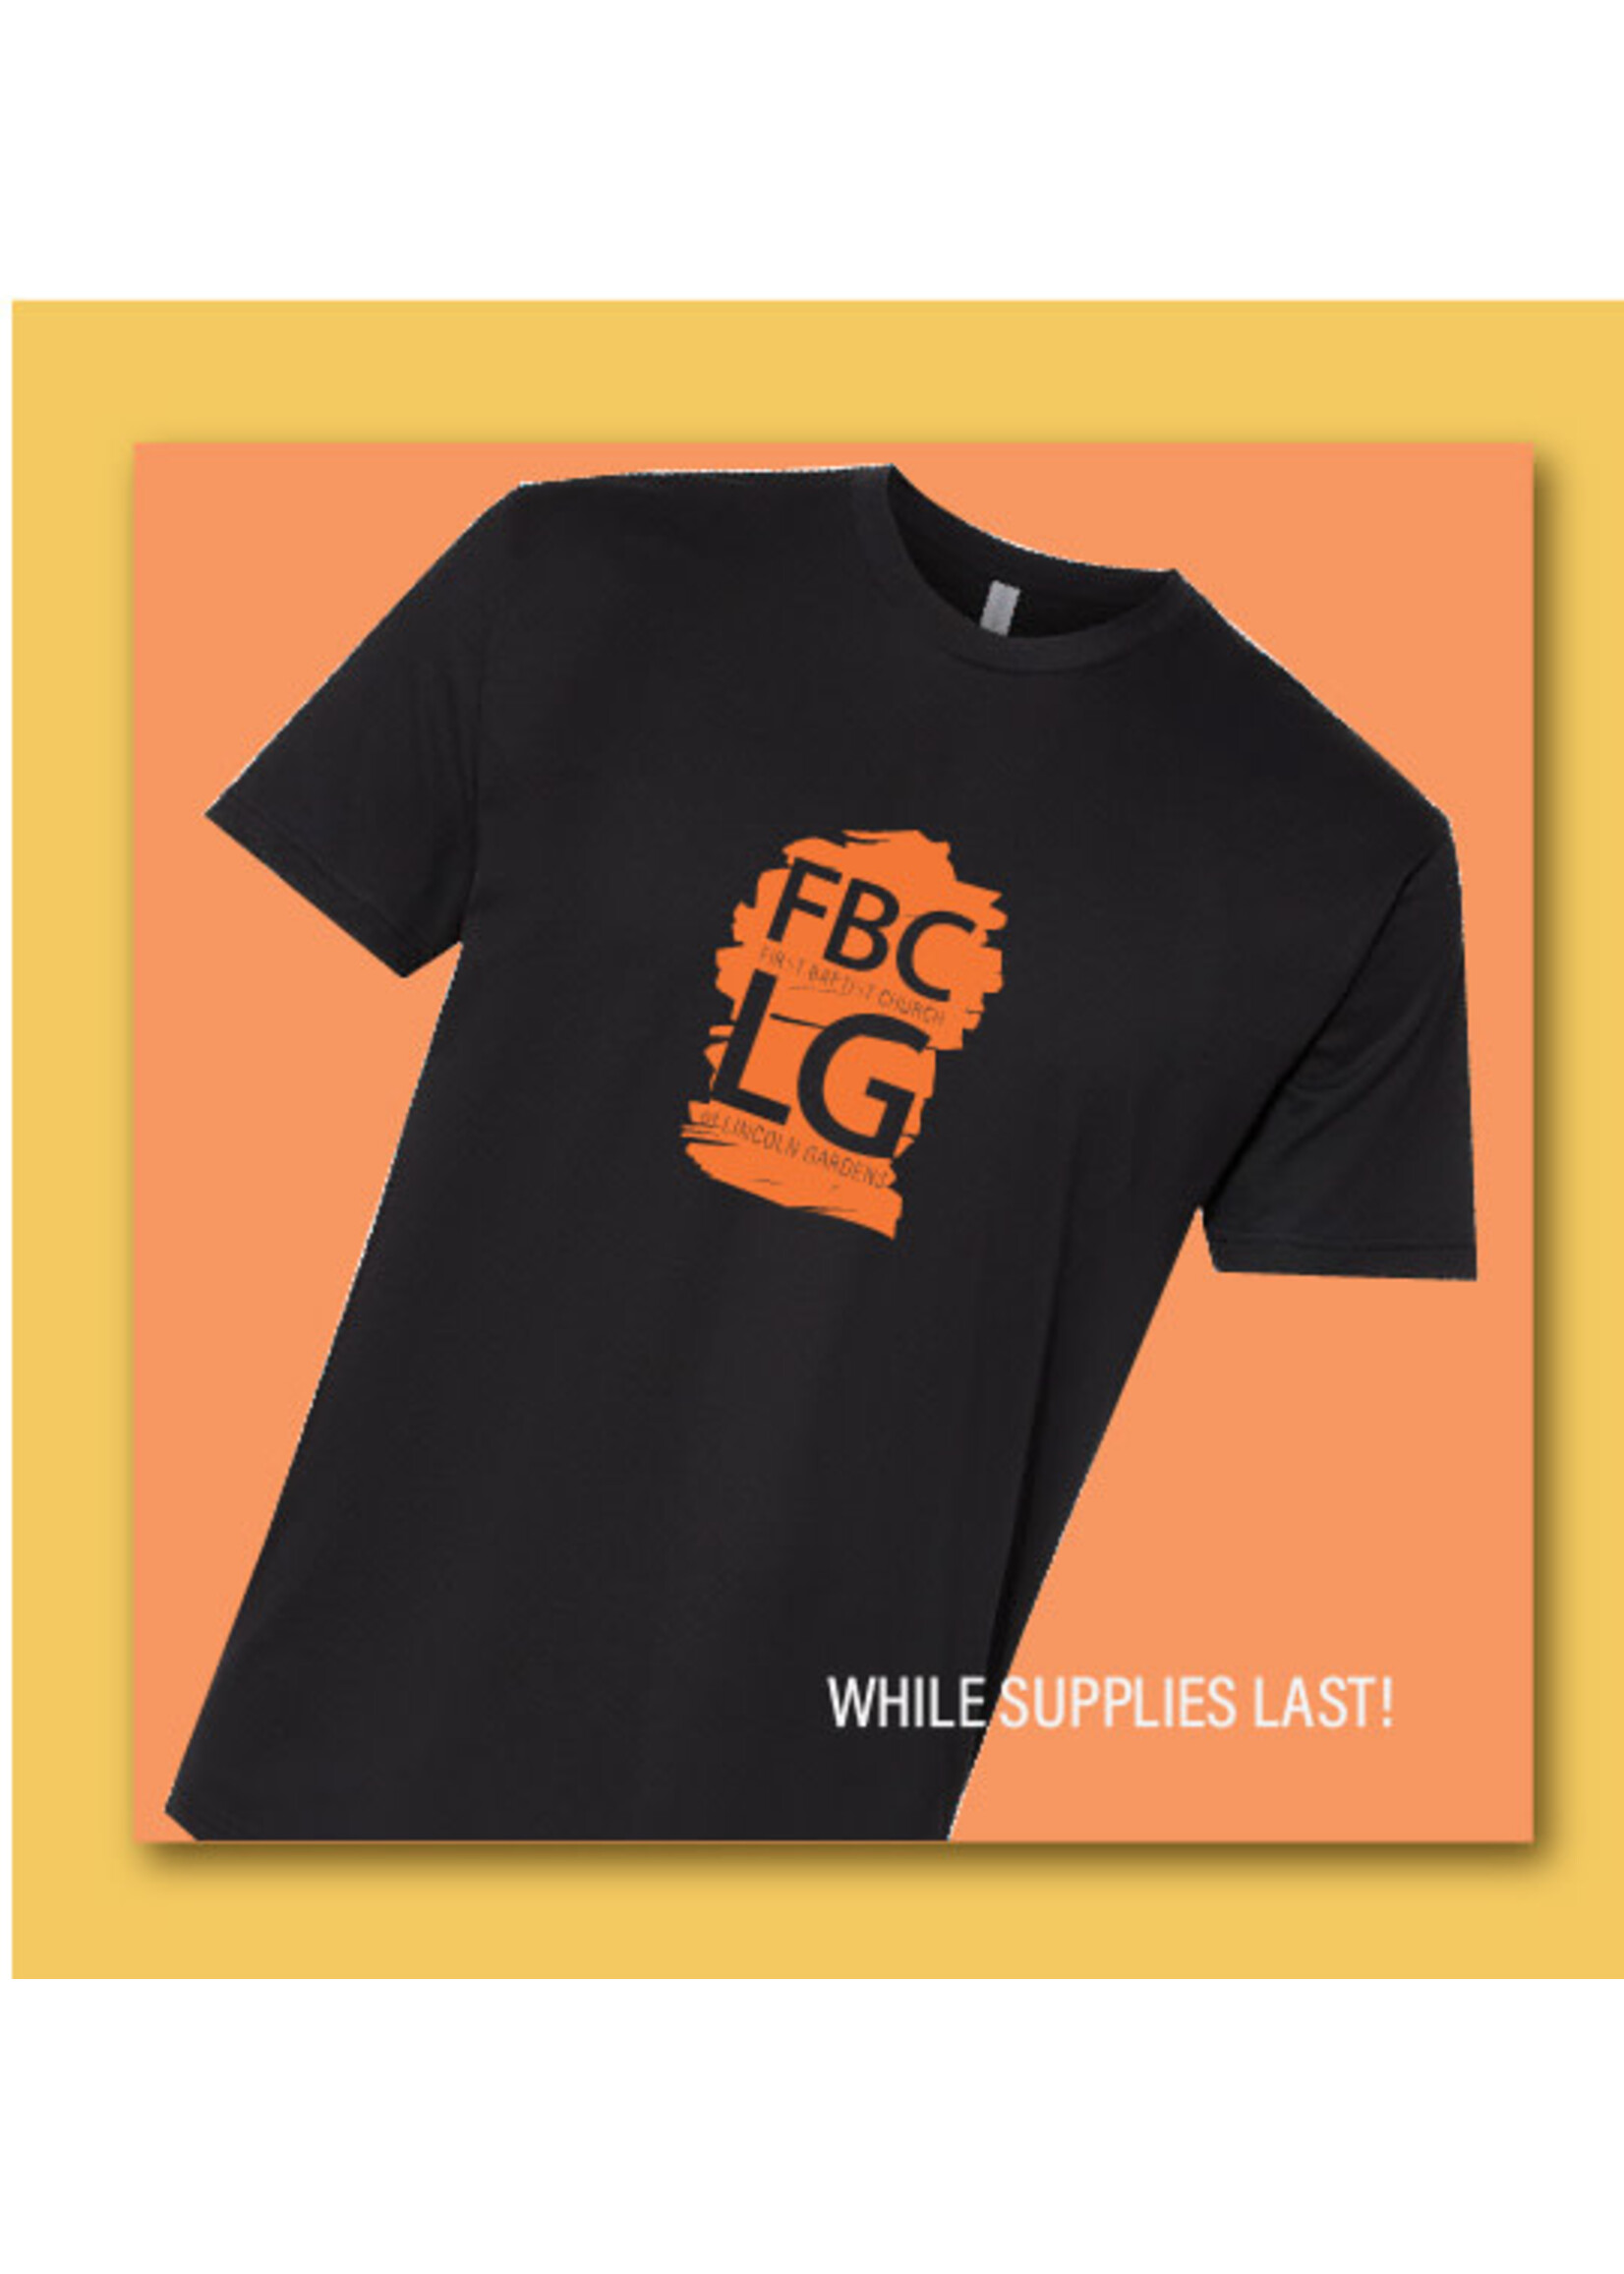 FBCLG T-Shirt Black (orange)